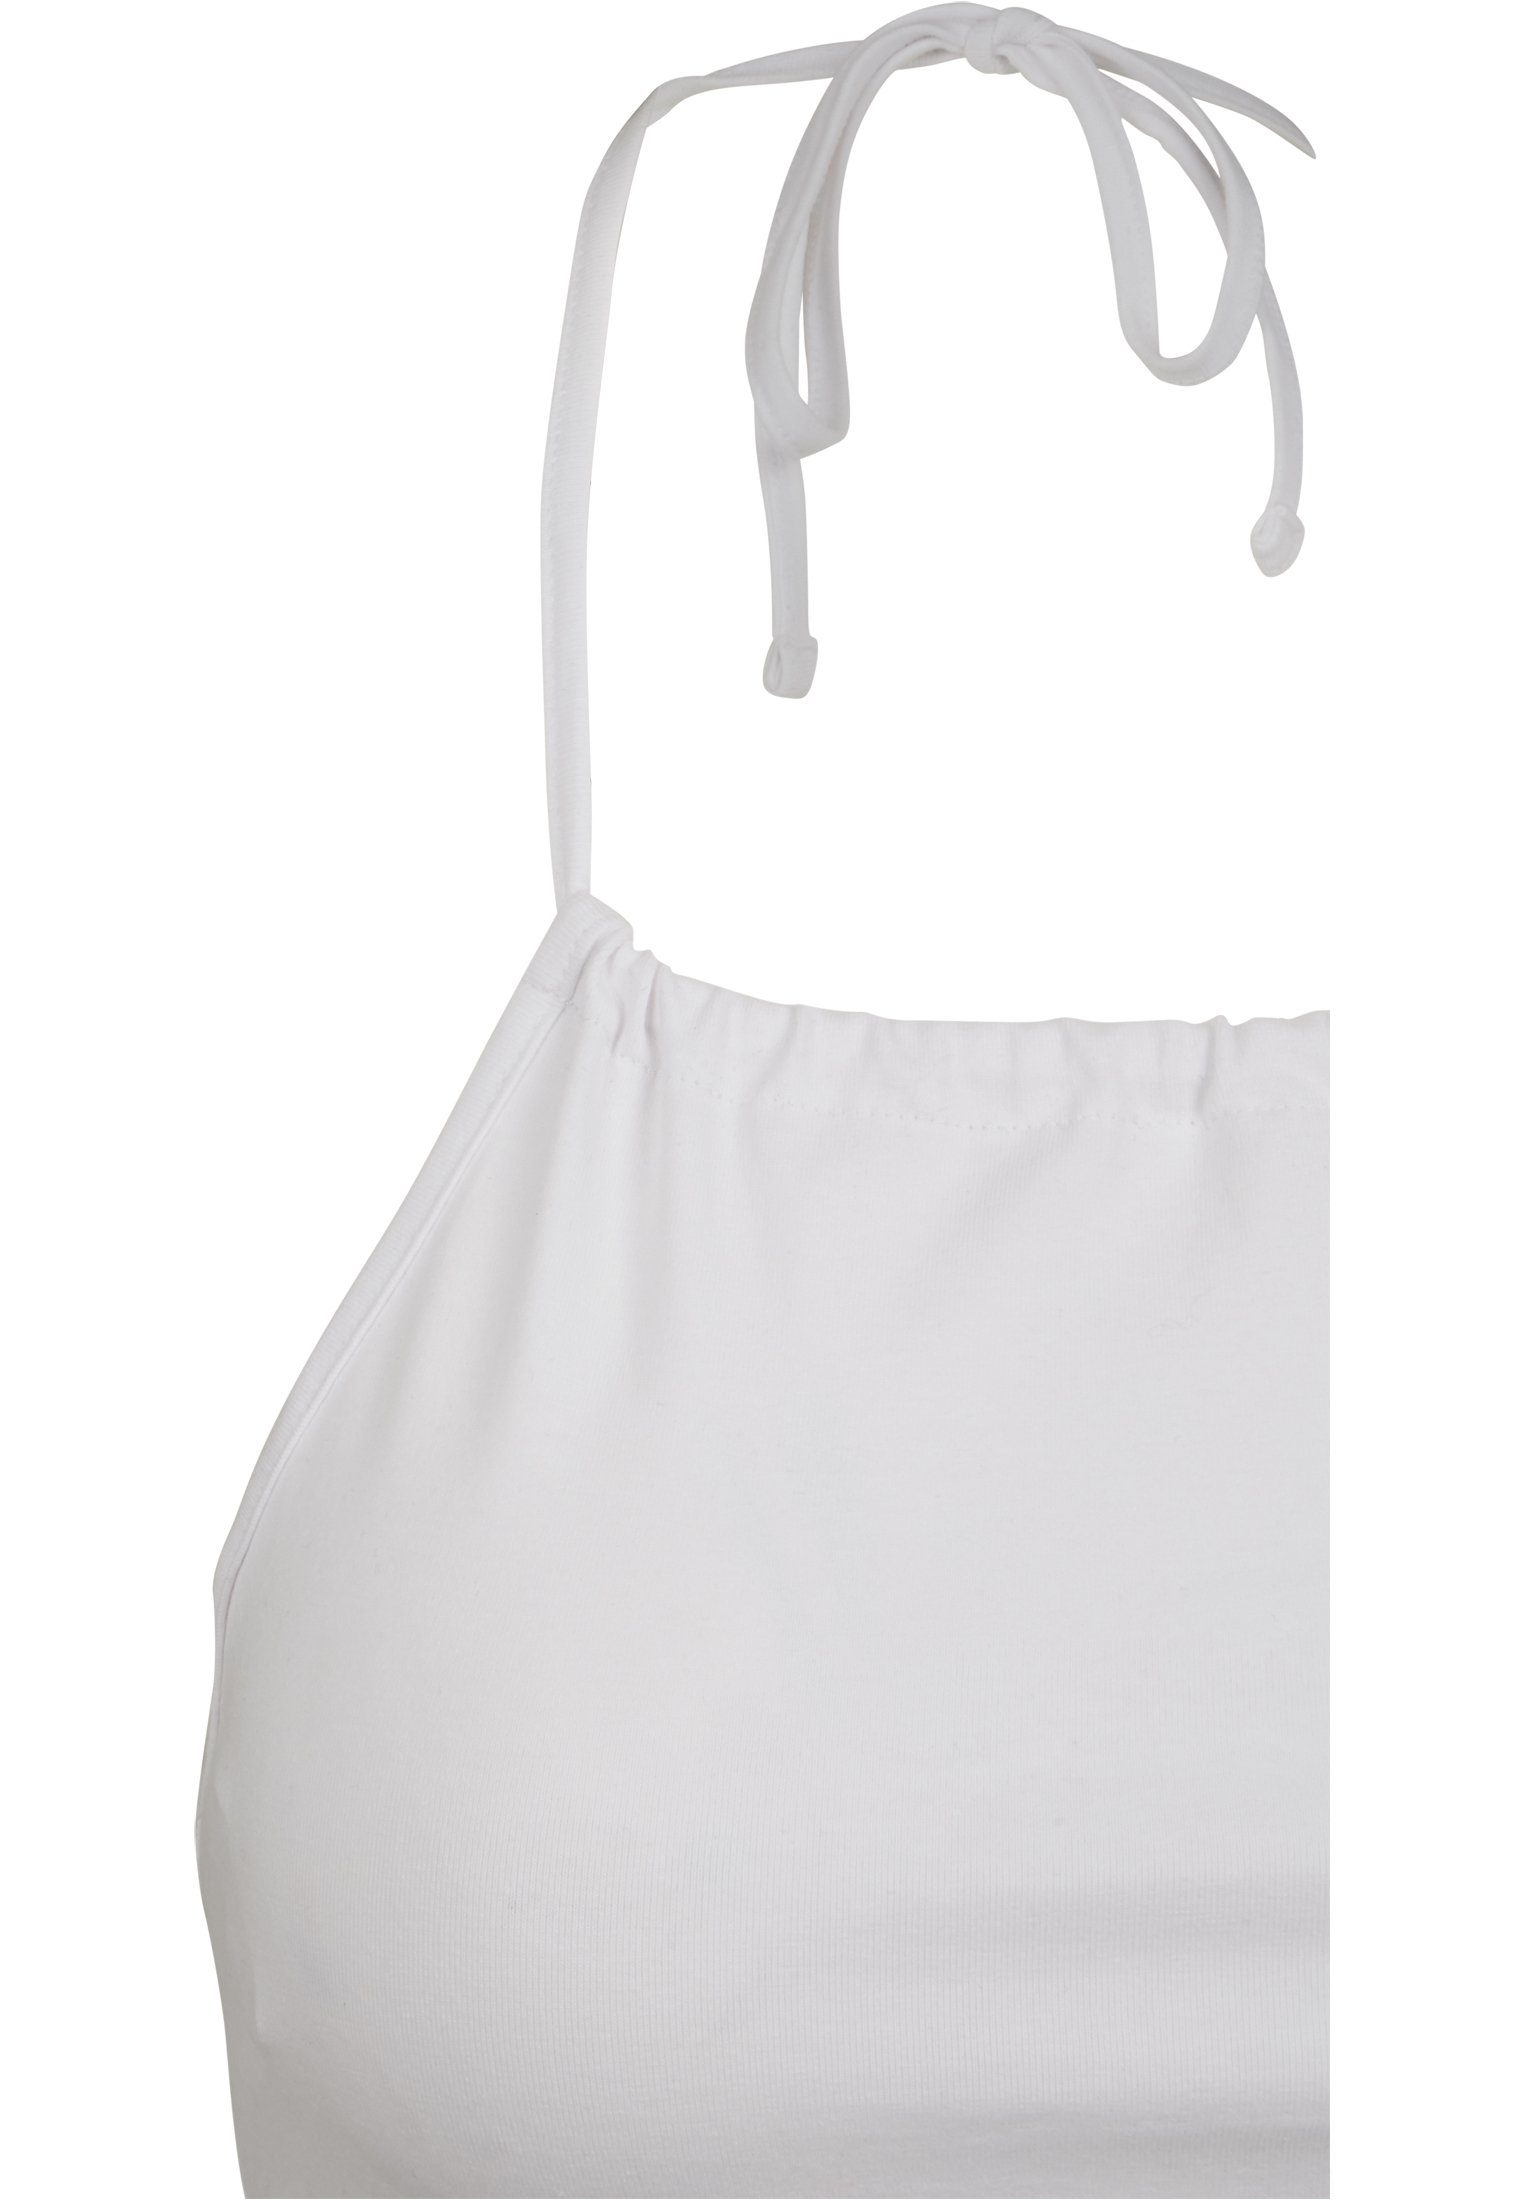 URBAN CLASSICS T-Shirt Frauen Ladies white Top (1-tlg) Cropped Neckholder